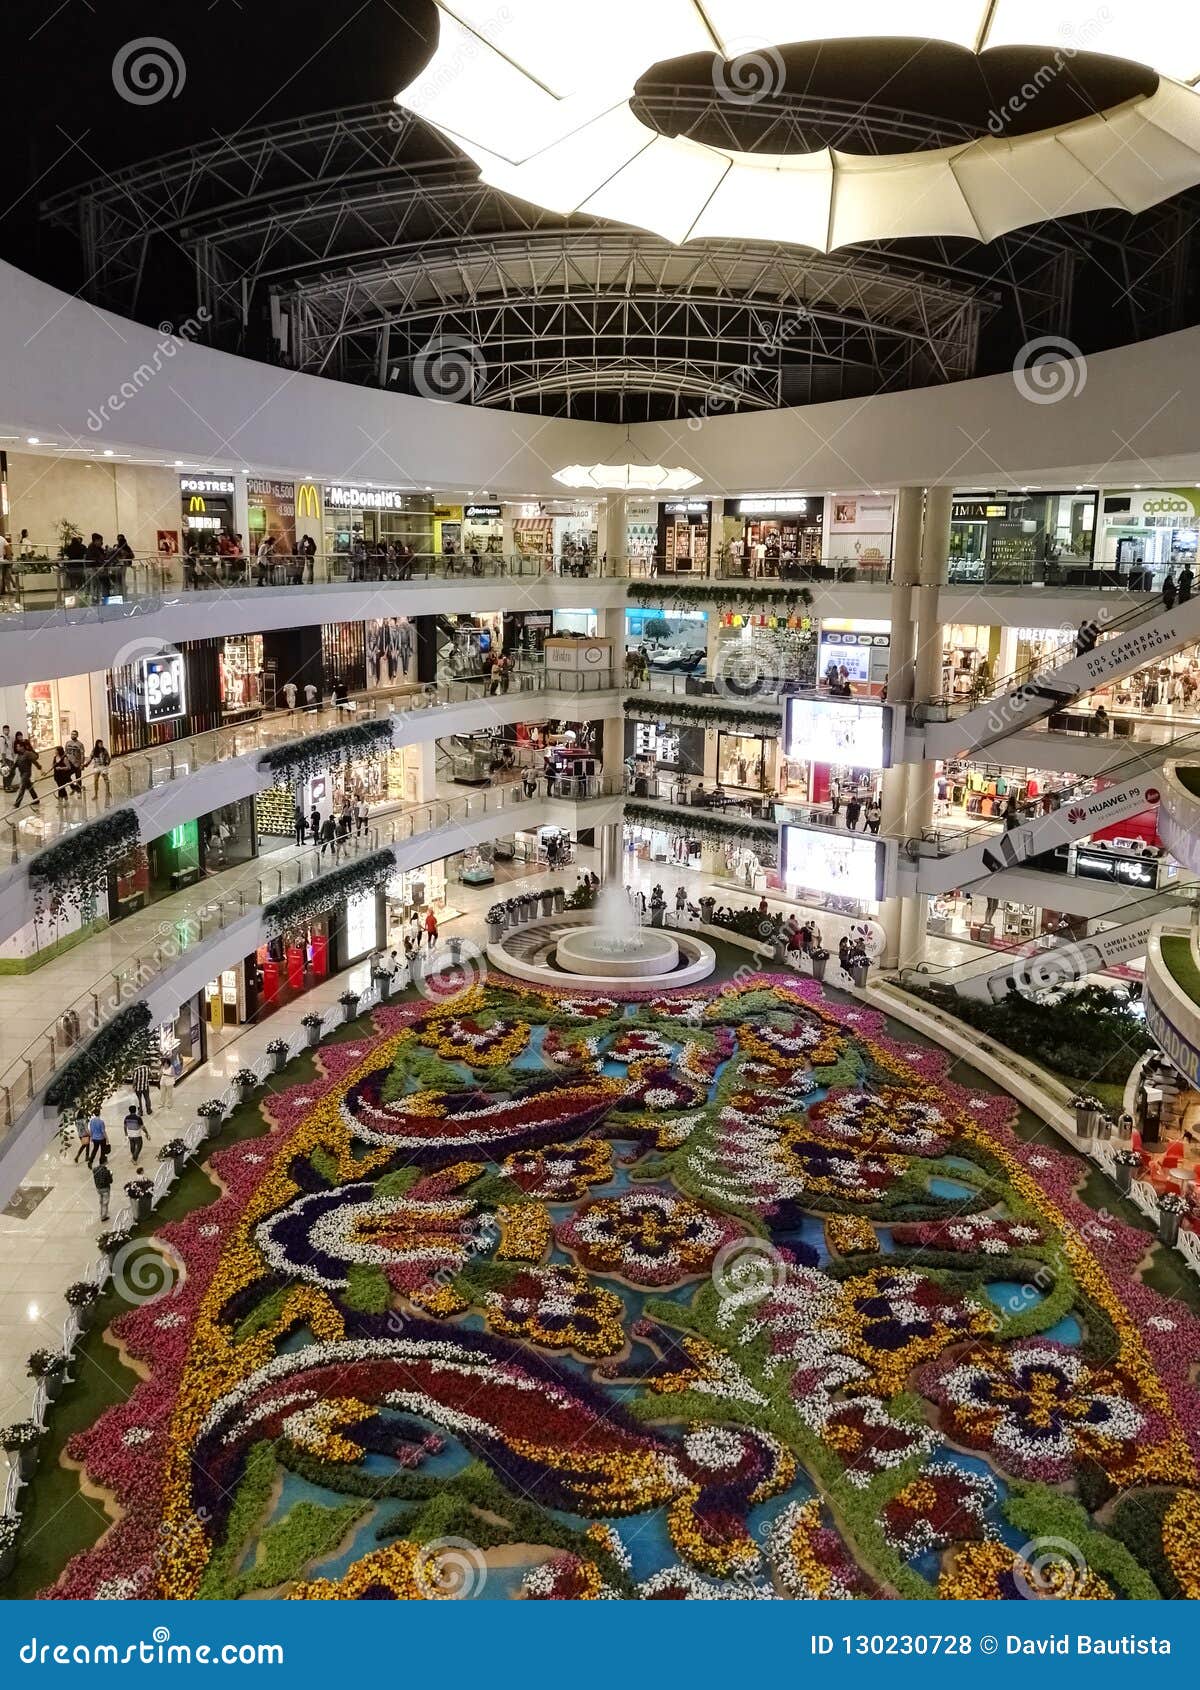 malls clipart flower